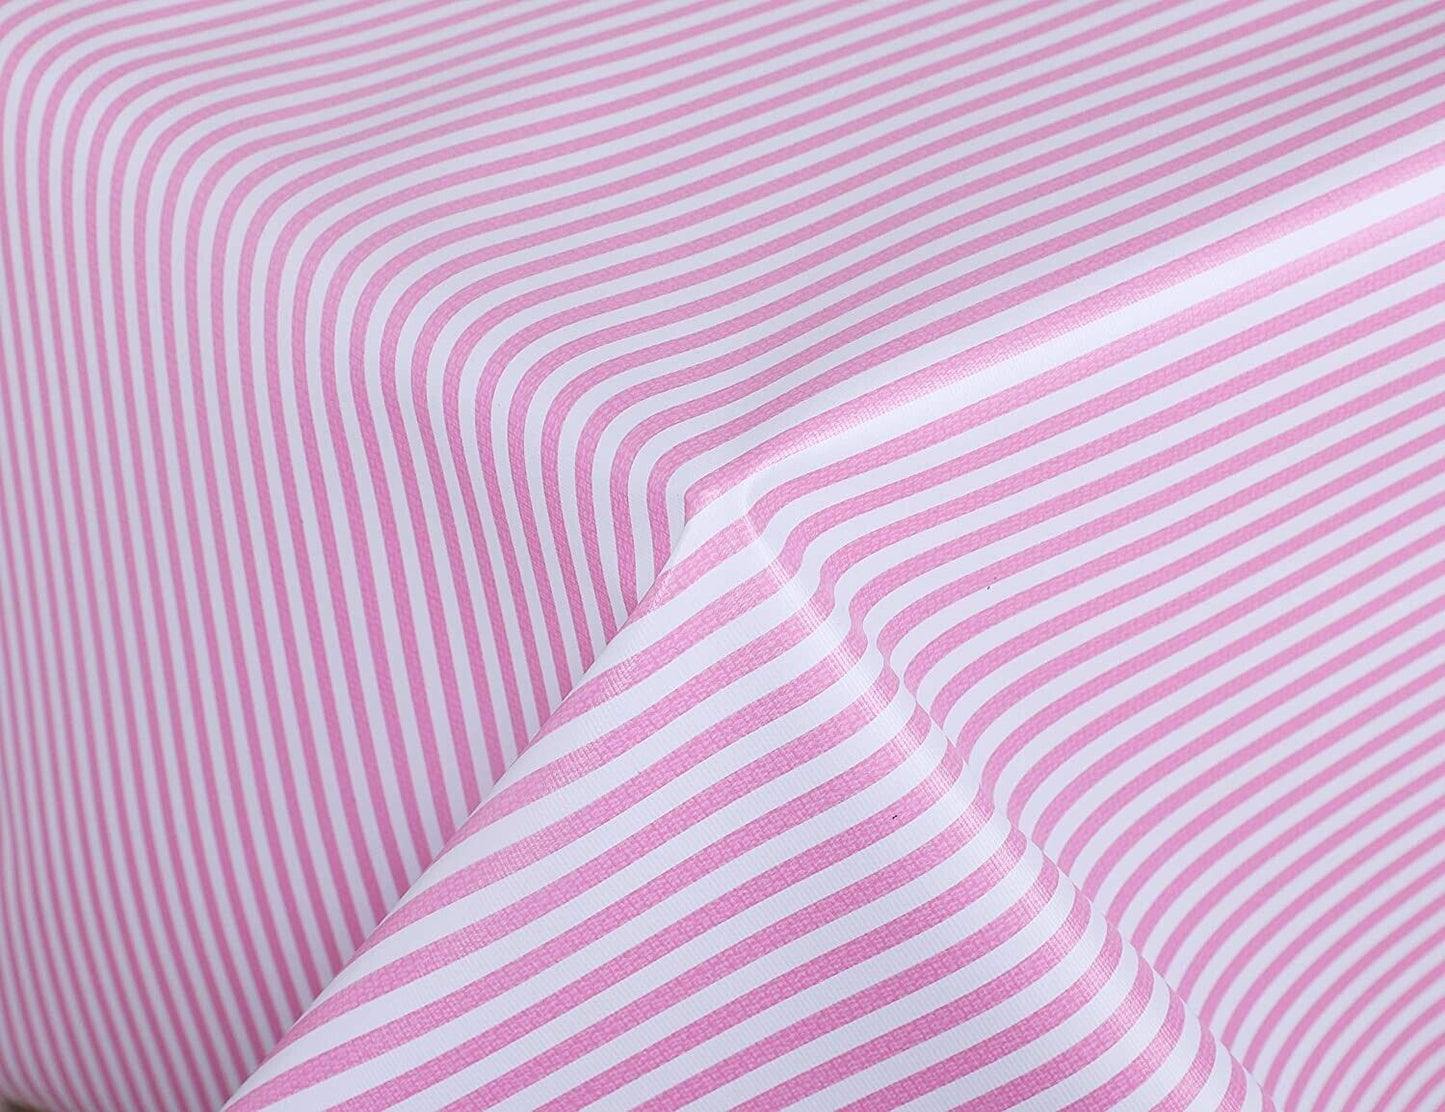 Vinylla Pink Stripes Easy Wipe Clean PVC Tablecloths 140x180CM